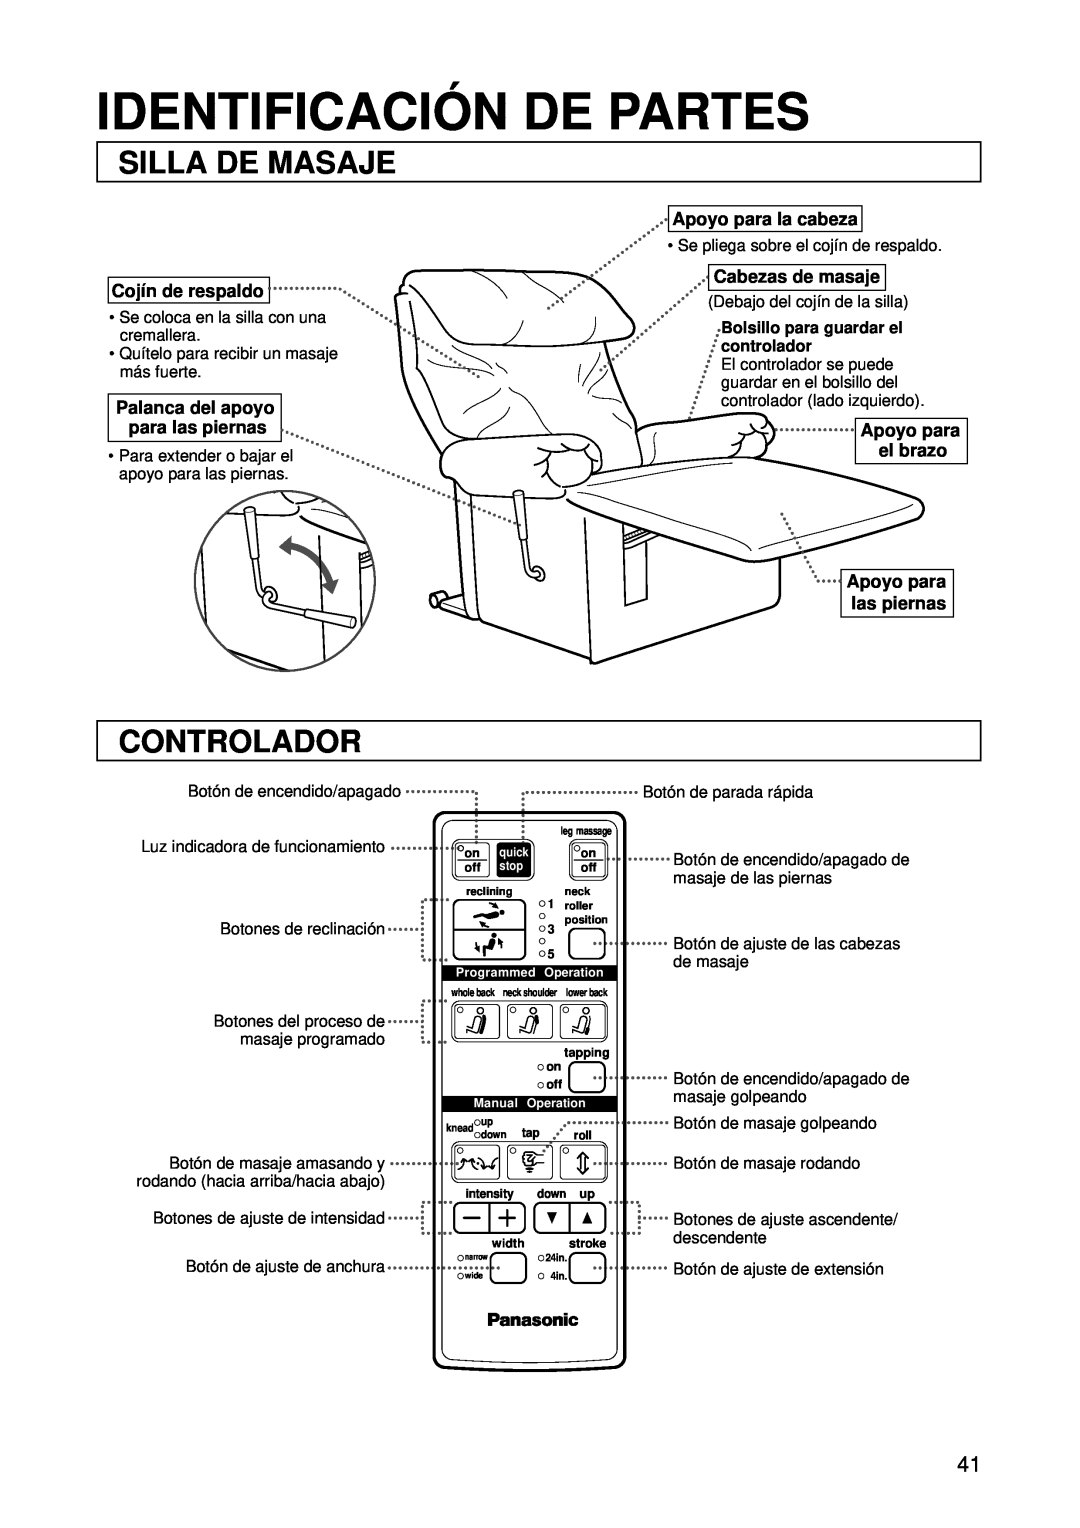 Panasonic EP1015 Identificació N De Partes, Silla De Masaje, Controlador, Bolsillo para guardar el controlador 